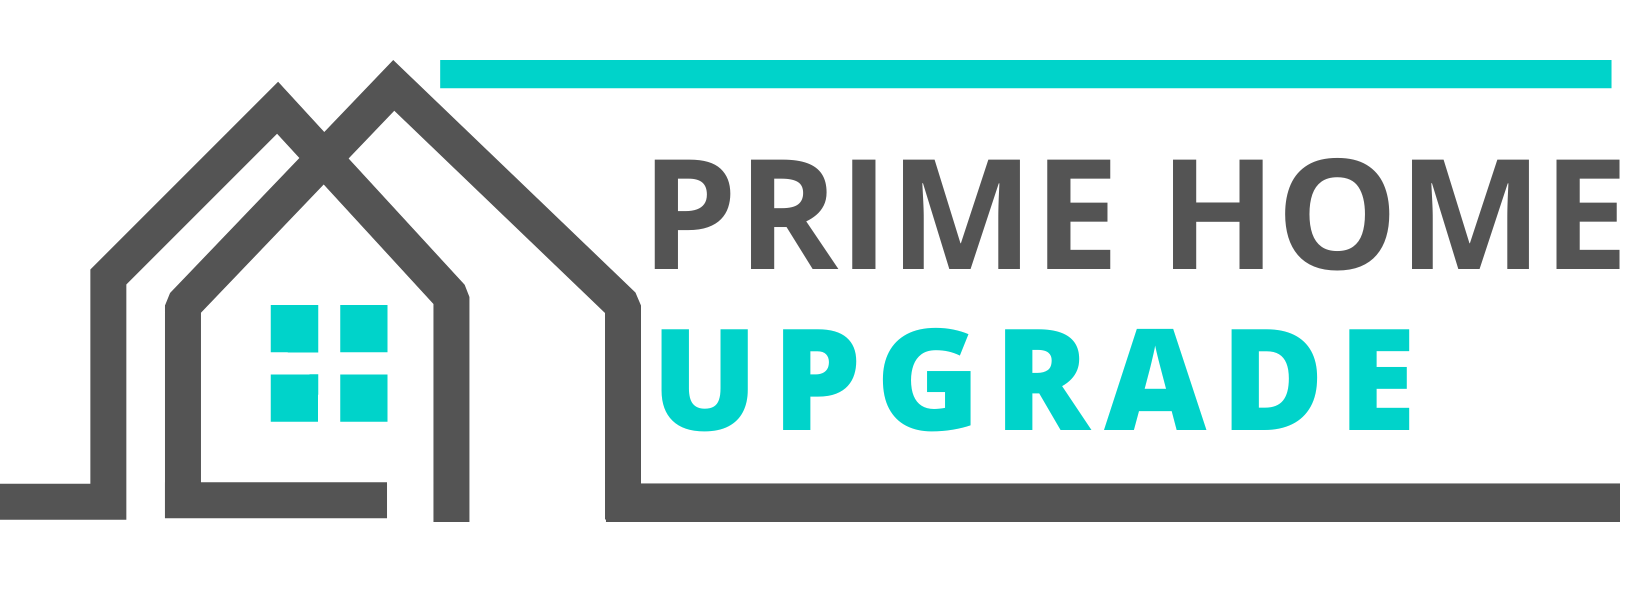 prime home upgrade logo